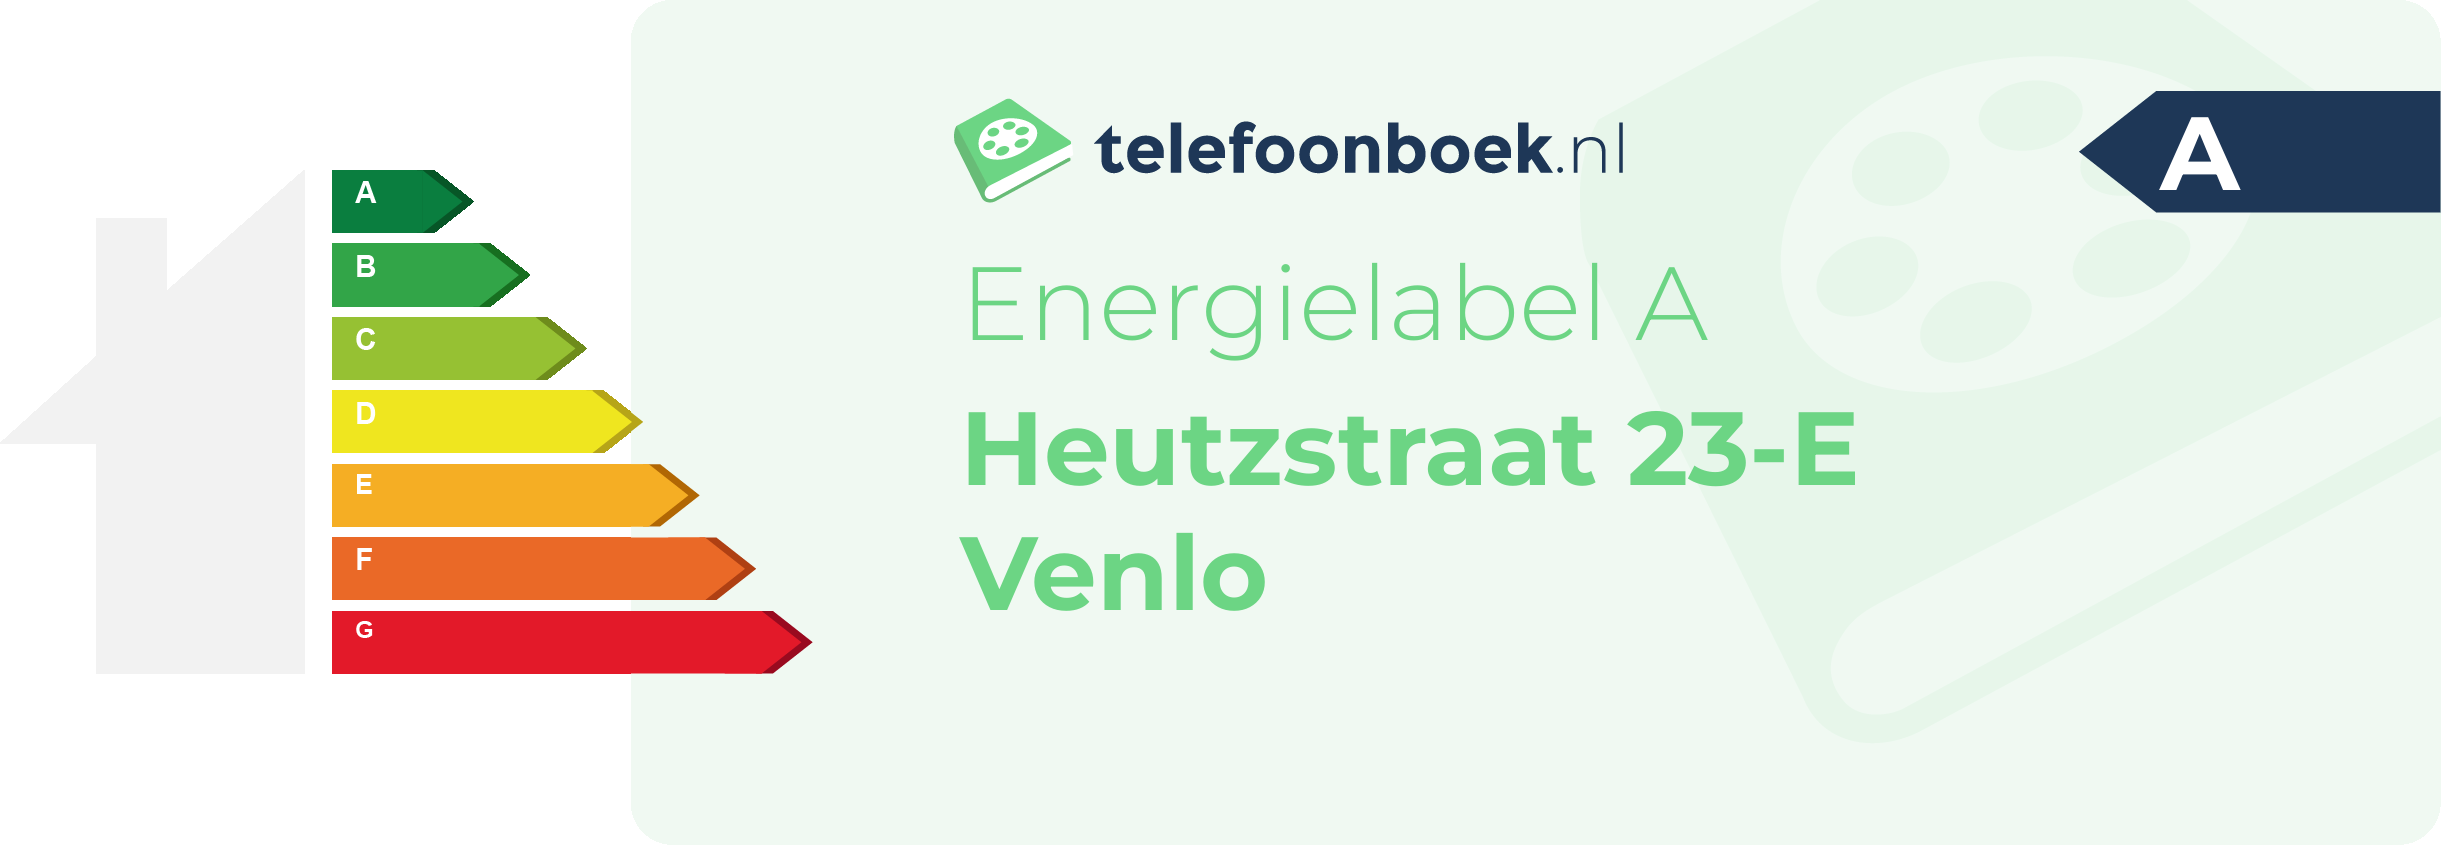 Energielabel Heutzstraat 23-E Venlo